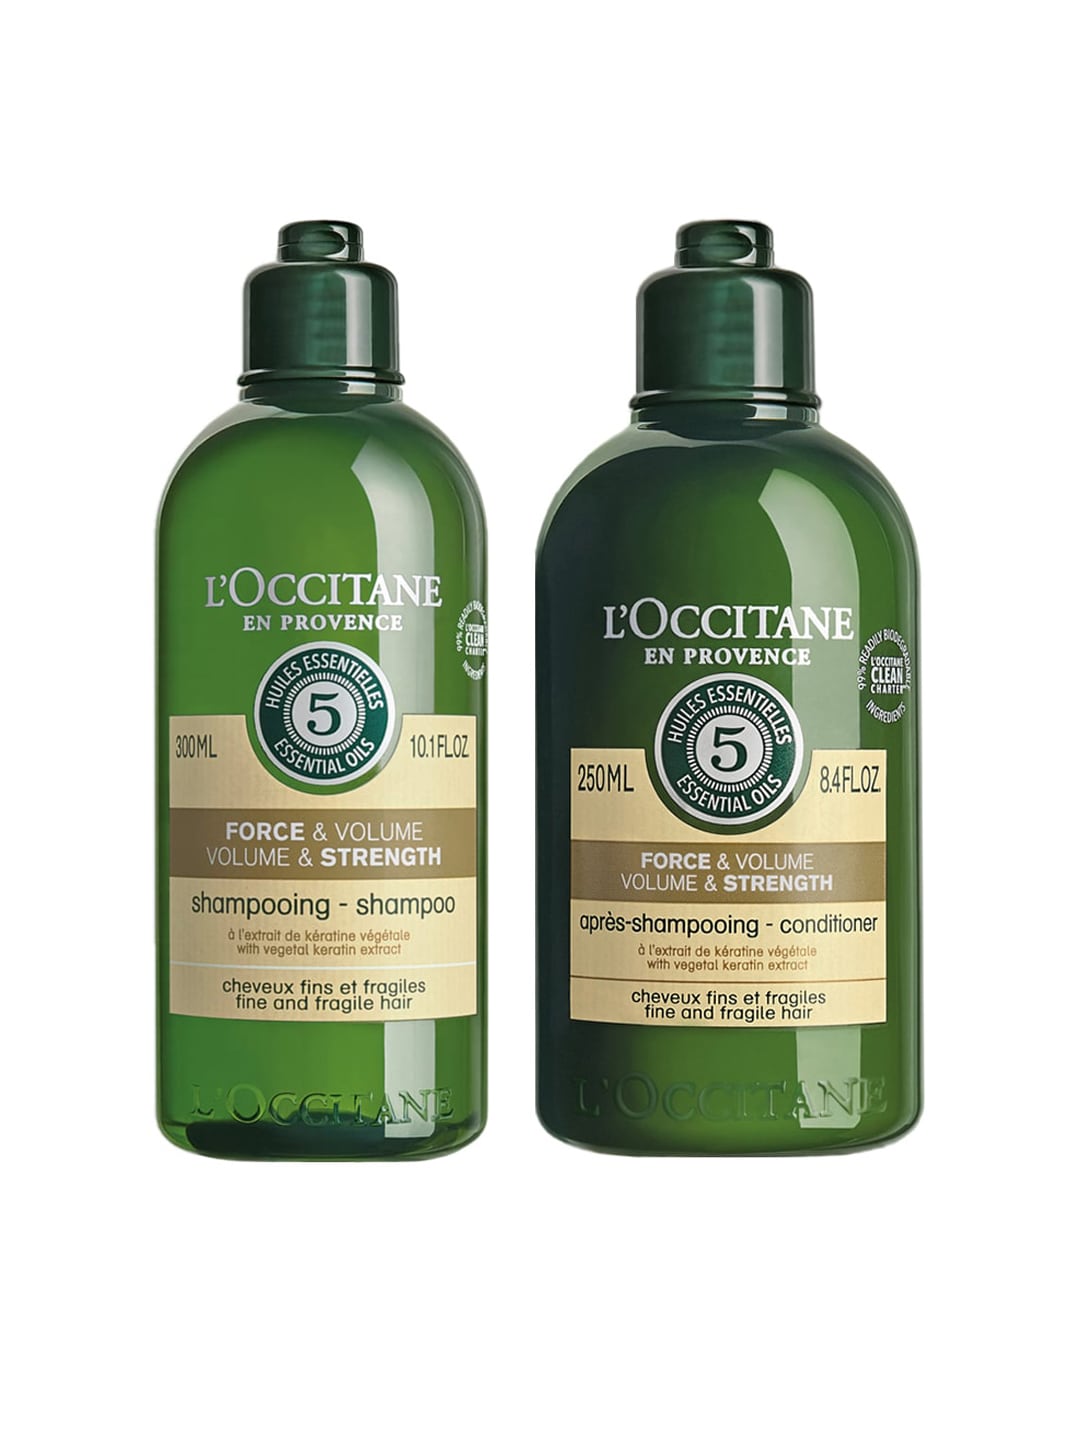 LOccitane en Provence Set of Volume & Strength Shampoo 300 ml & Conditioner 250 ml Price in India